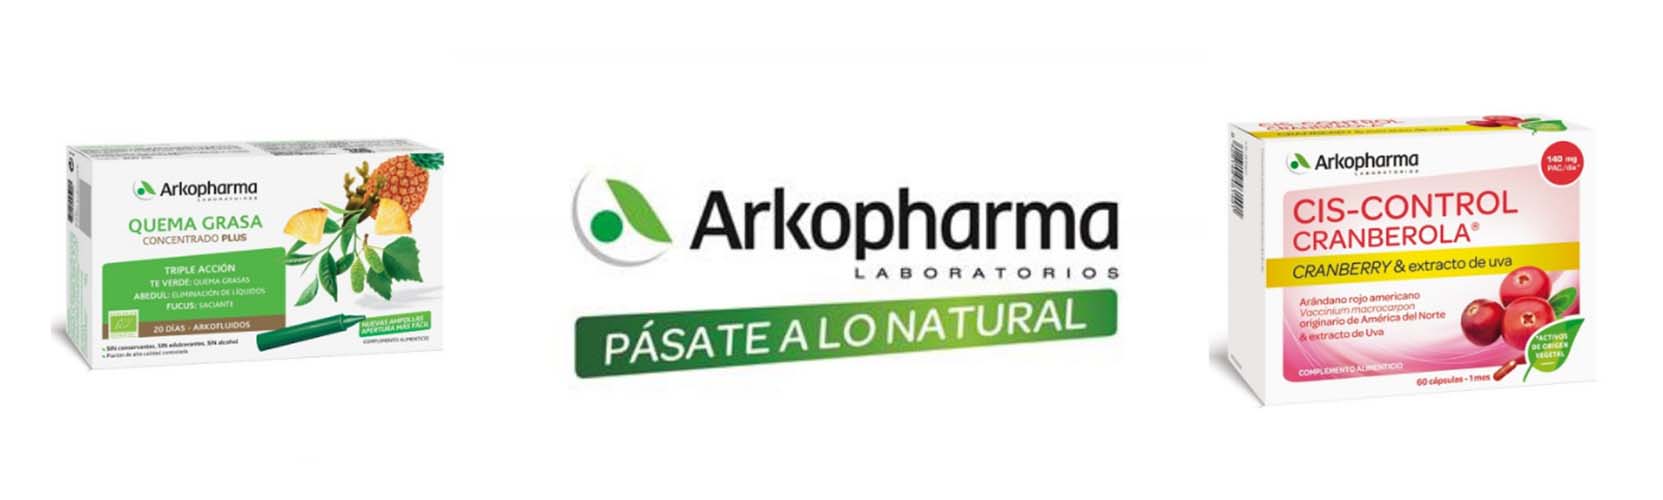 productos arkopharma